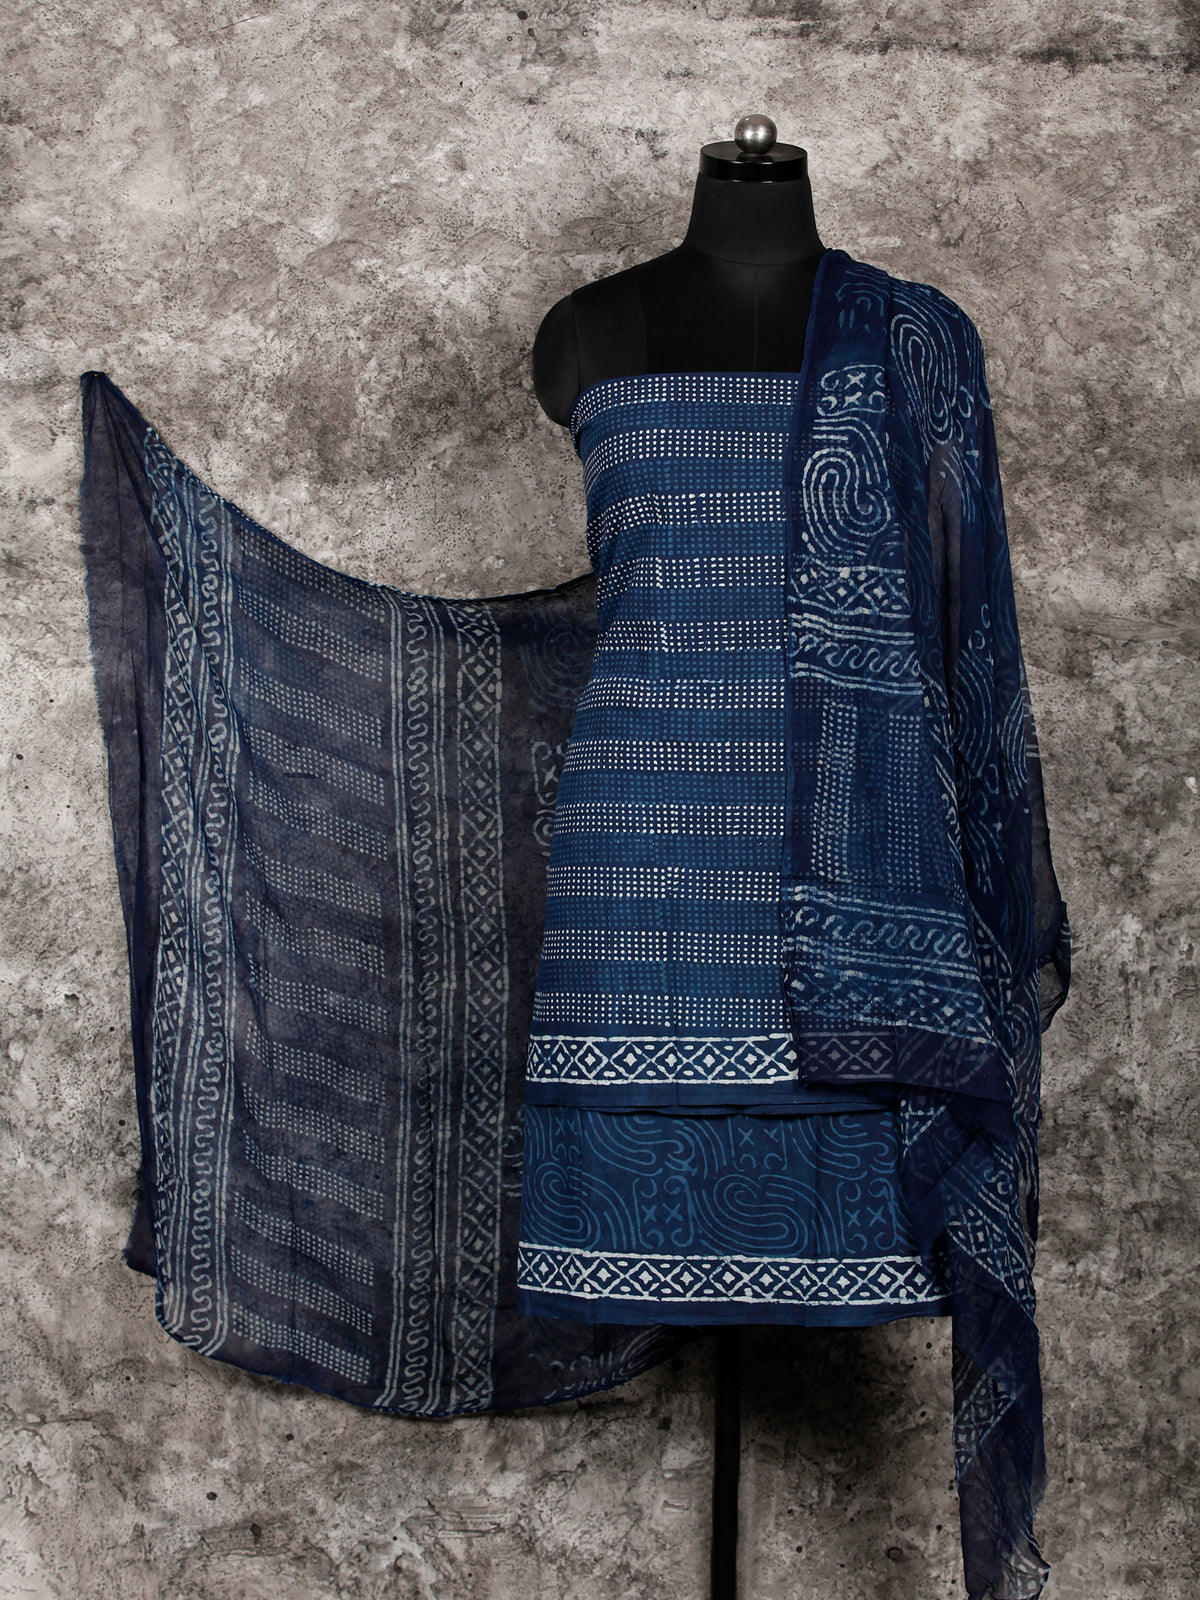 Indigo Ivory Coral Hand Block Printed Cotton Suit-Salwar Fabric With Chiffon Dupatta (Set of 3) - SU01HB343